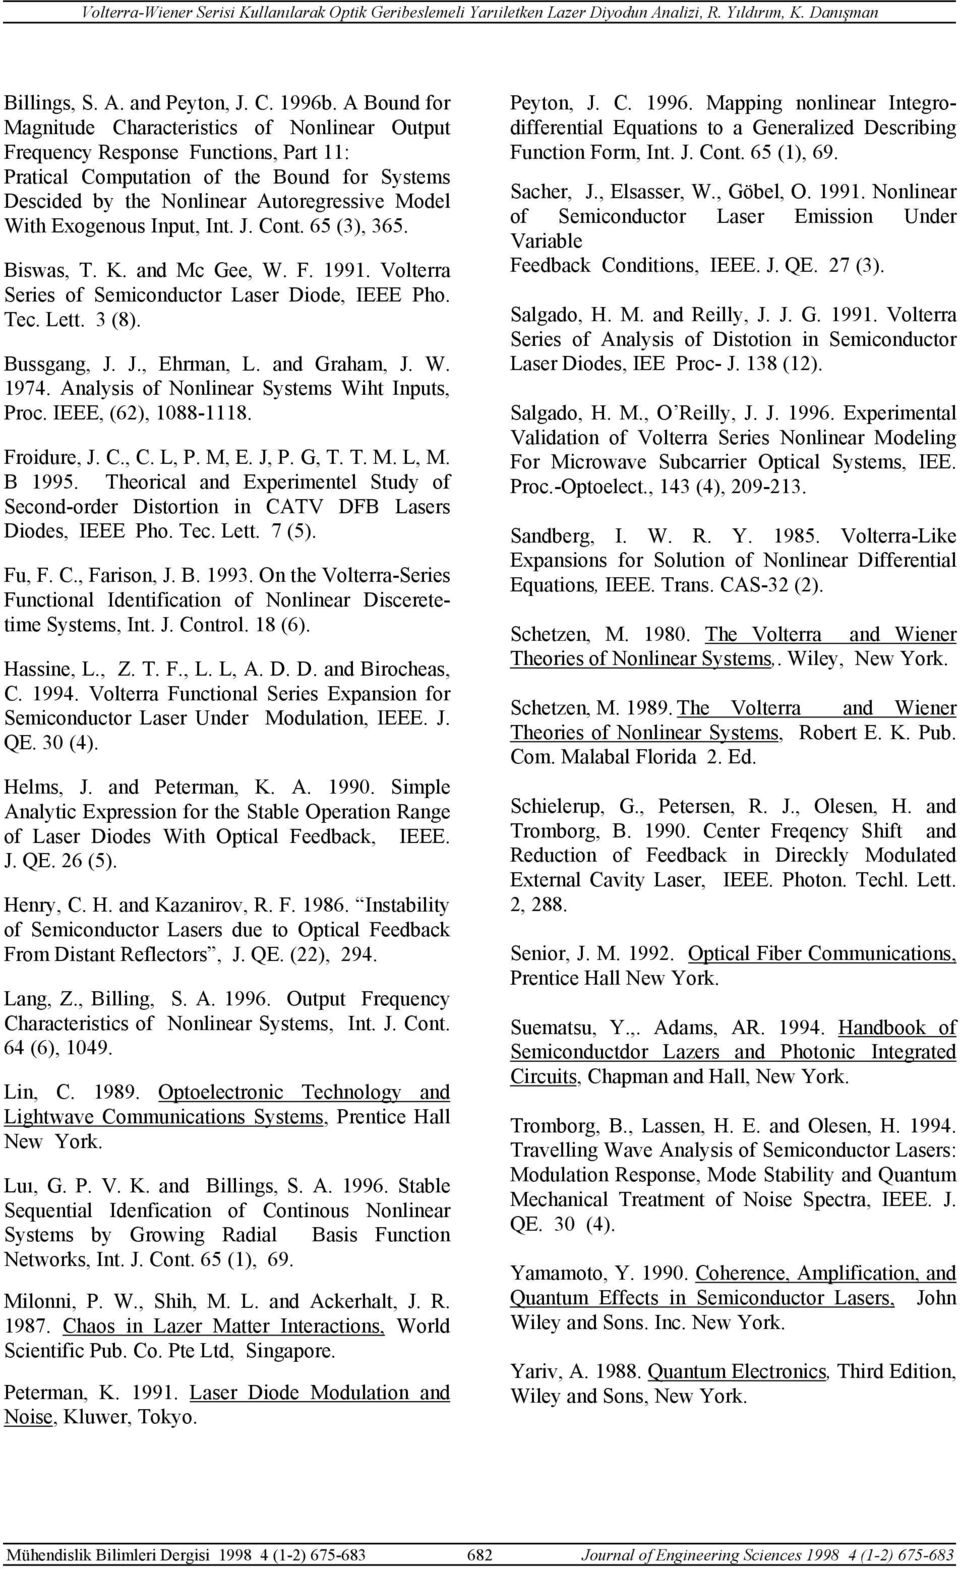 65 (3), 365. Biswas, T. K. ad Mc Gee, W. F. 99. Voltea Seies of Semicoducto Lase Diode, IEEE Pho. Tec. Lett. 3 (8). Bussgag, J. J., Ehma, L. ad Gaham, J. W. 974.